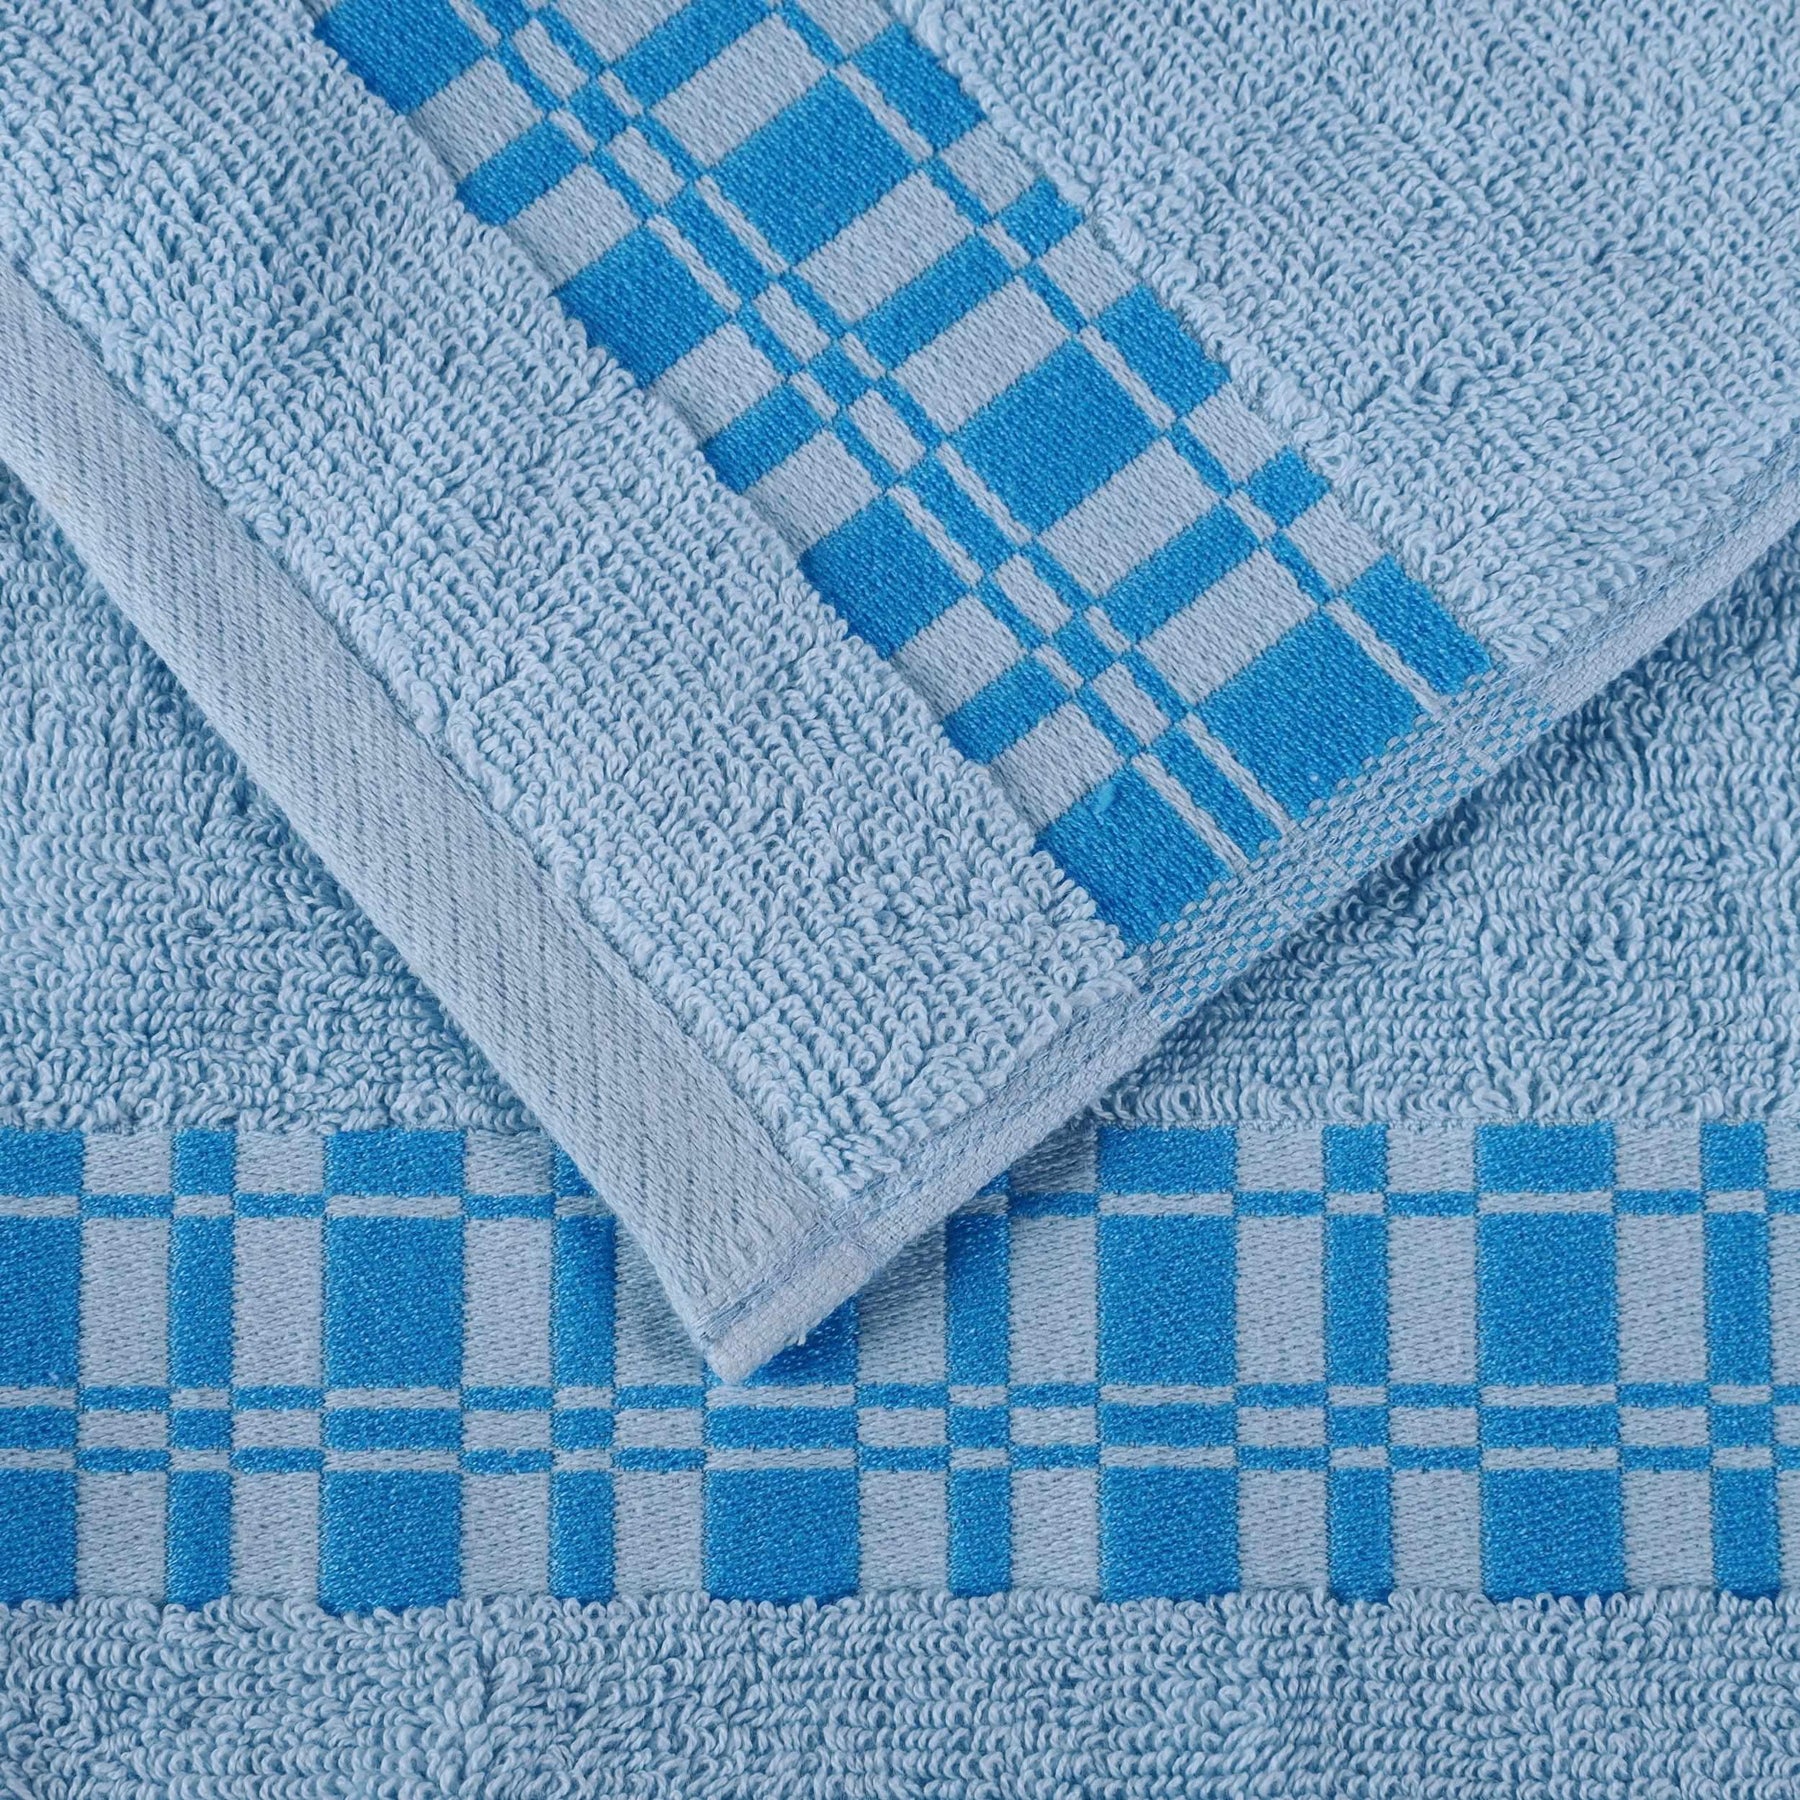  Superior Larissa Cotton 8-Piece Assorted Towel Set with Geometric Embroidered Jacquard Border - Light Blue